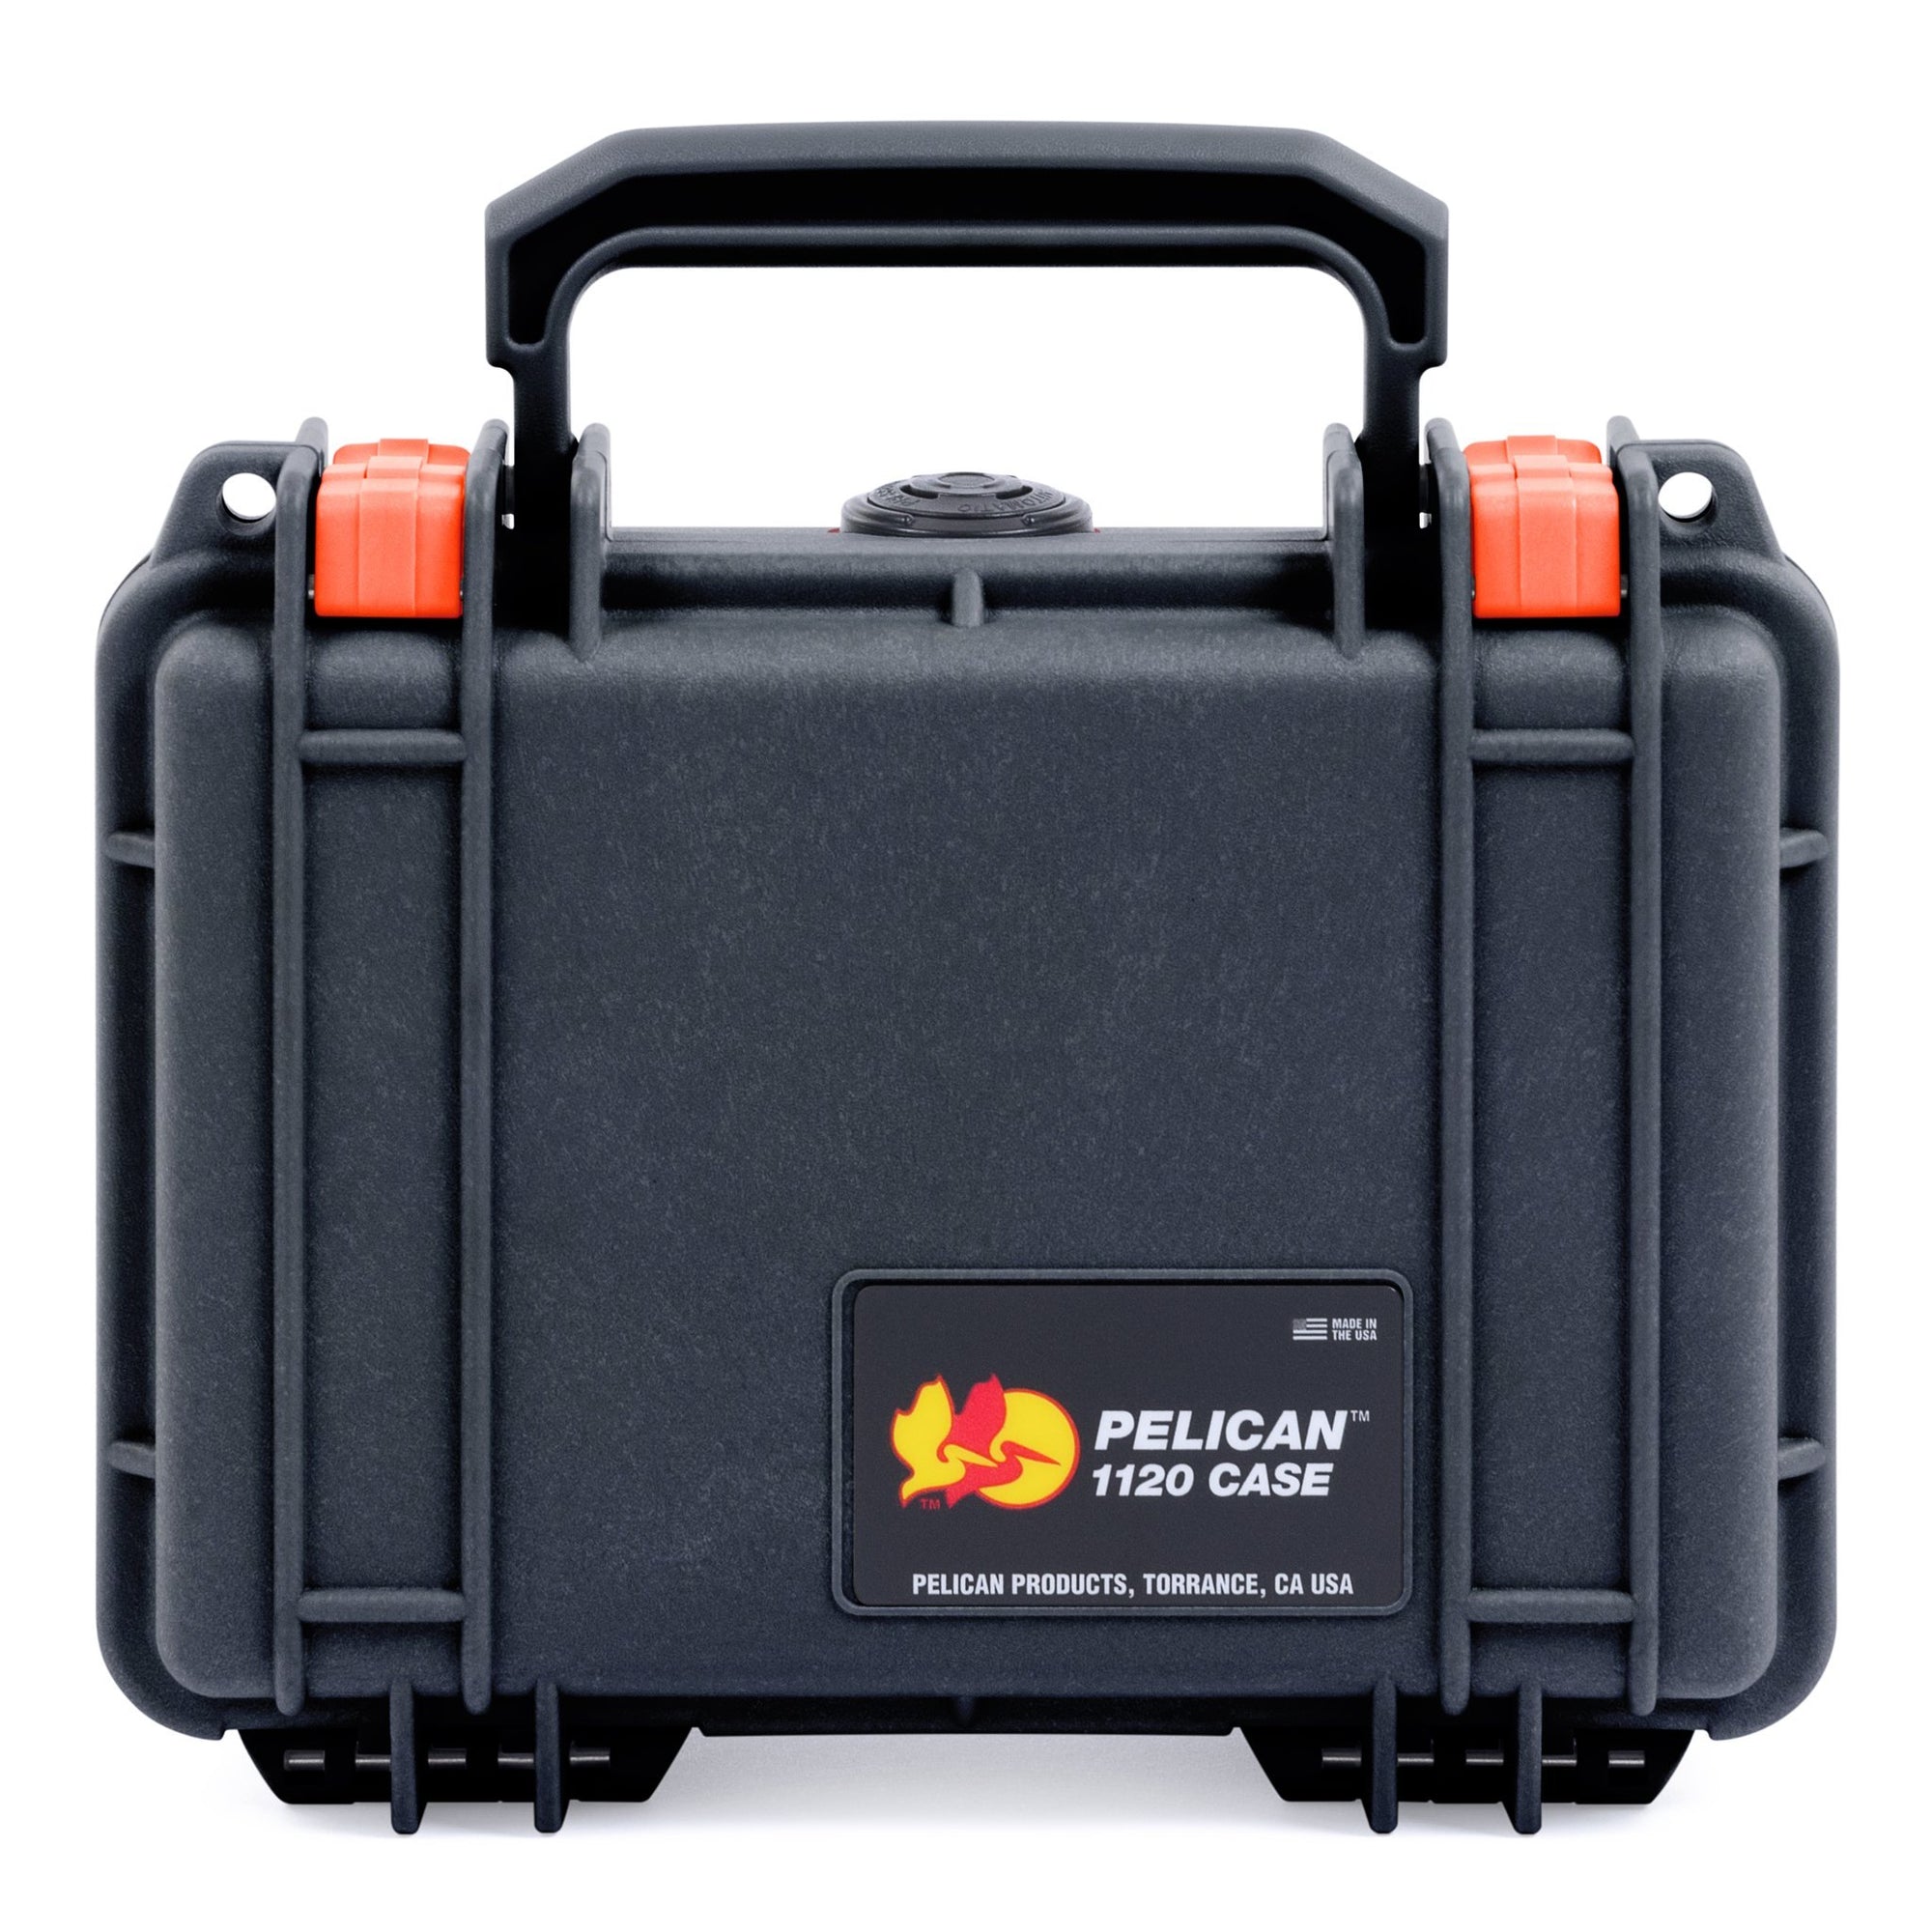 Pelican 1120 Case, Black with Orange Latches ColorCase 